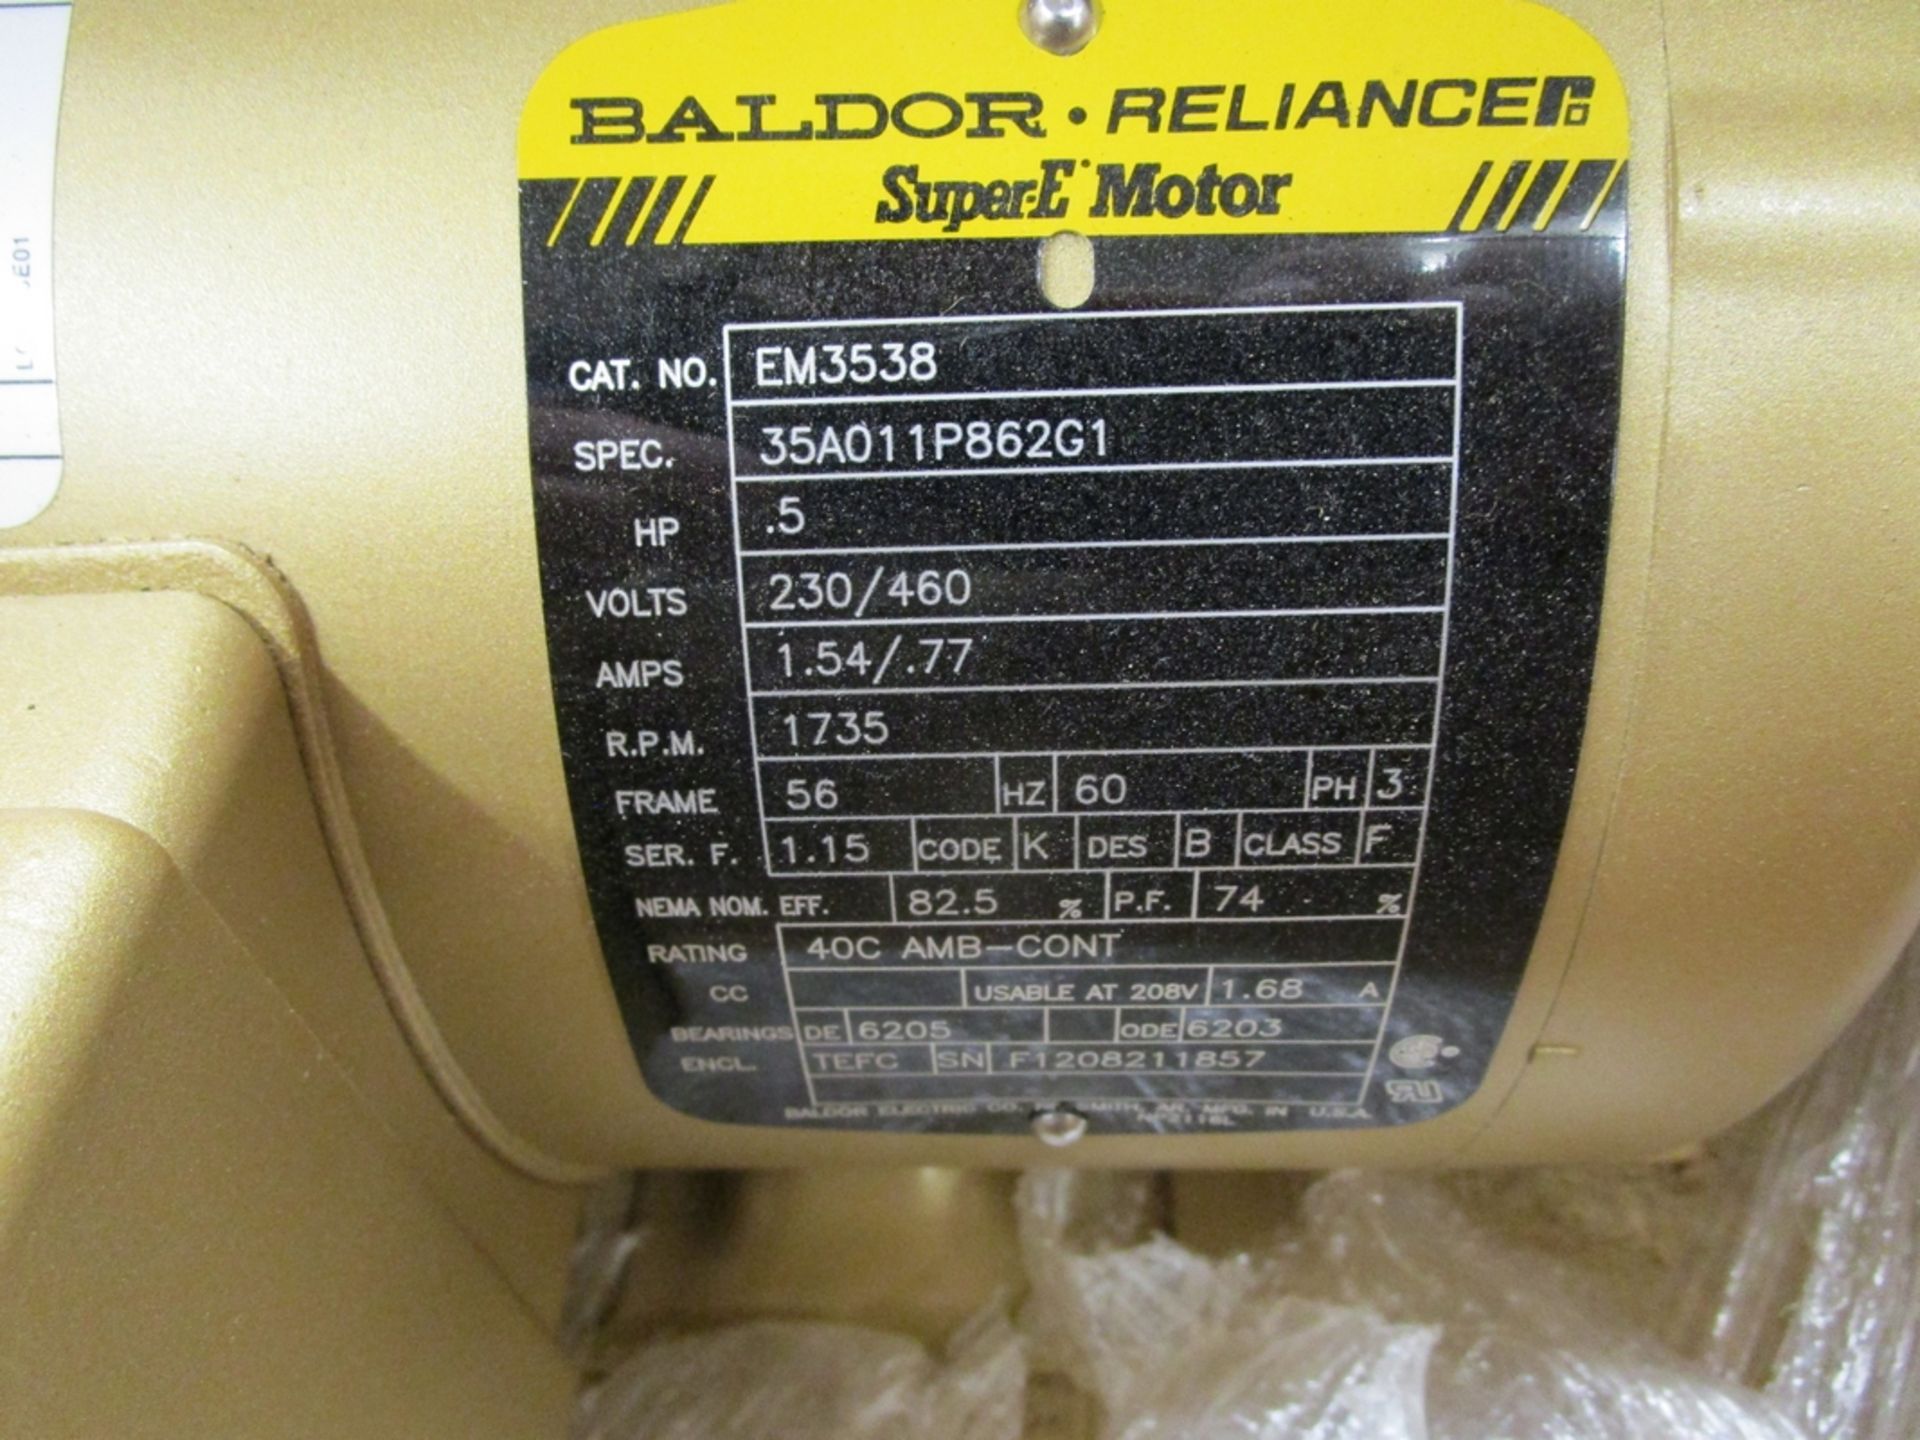 Baldor 1/2-HP Super-E Induction Motor - Image 3 of 3